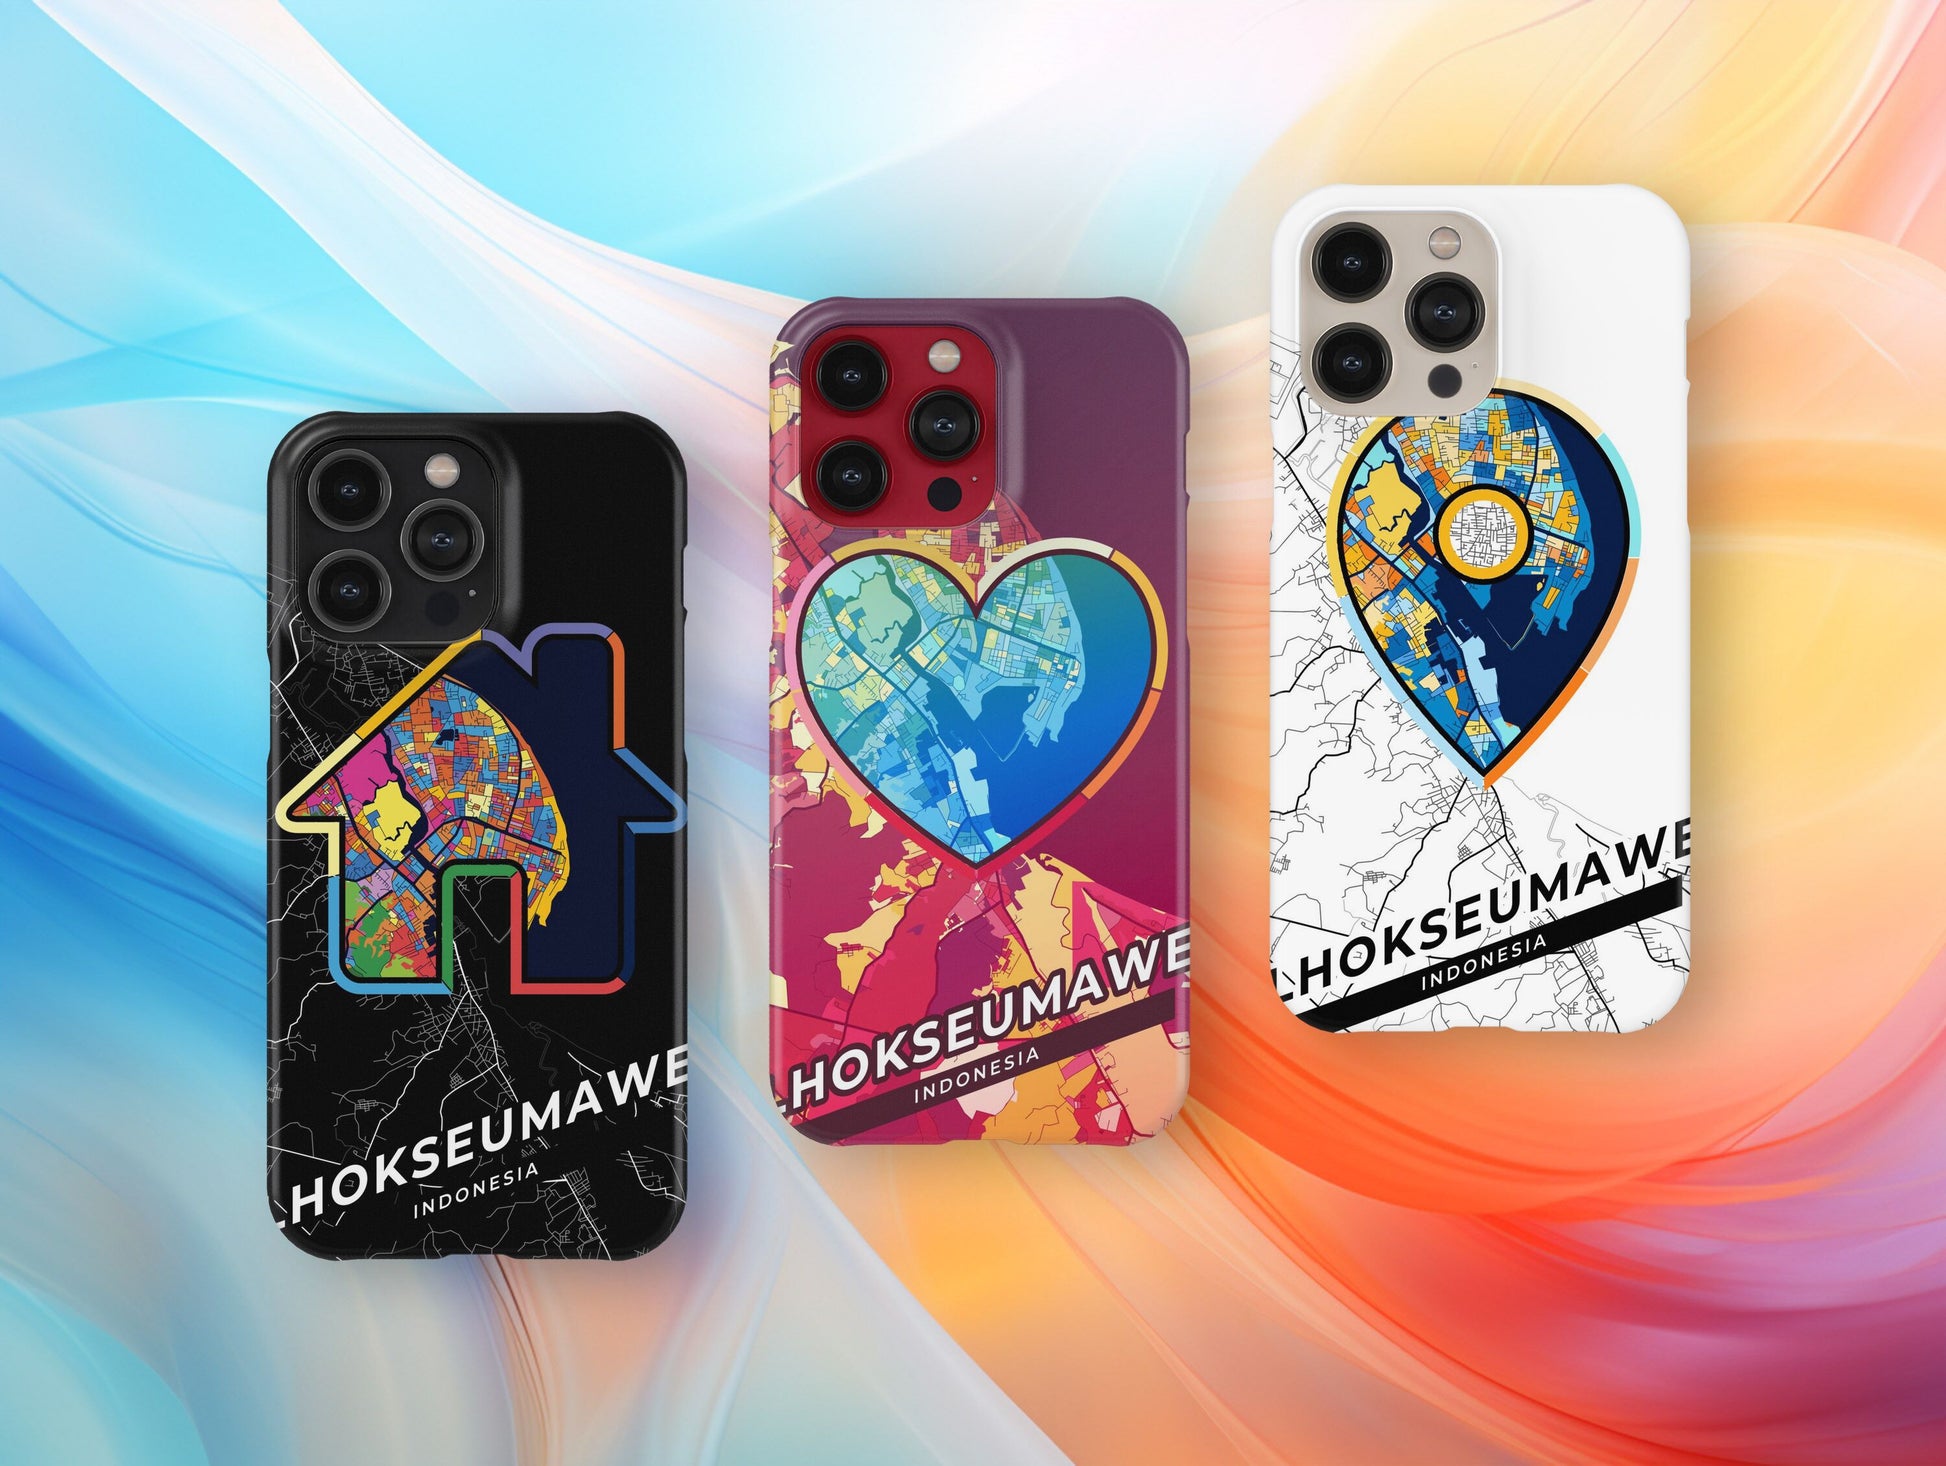 Lhokseumawe Indonesia slim phone case with colorful icon. Birthday, wedding or housewarming gift. Couple match cases.